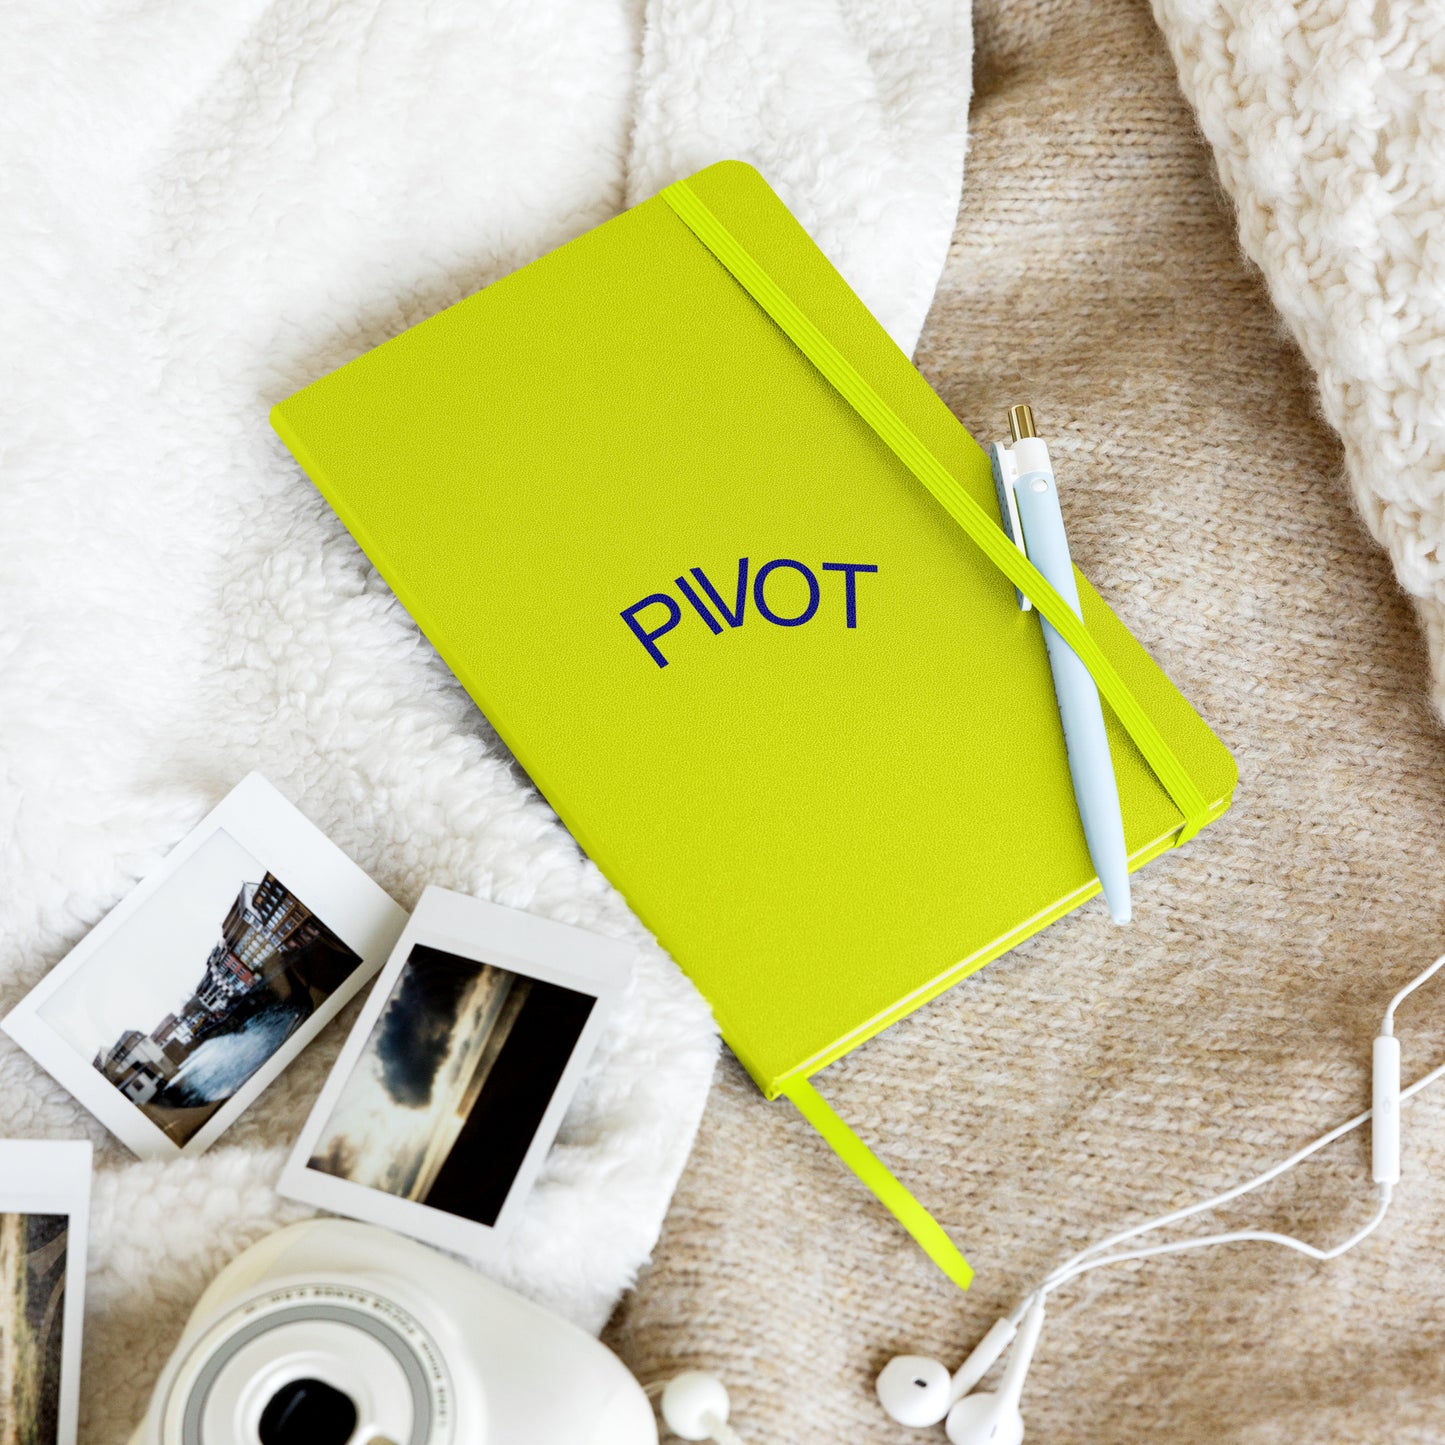 PIVOT Hardcover bound notebook